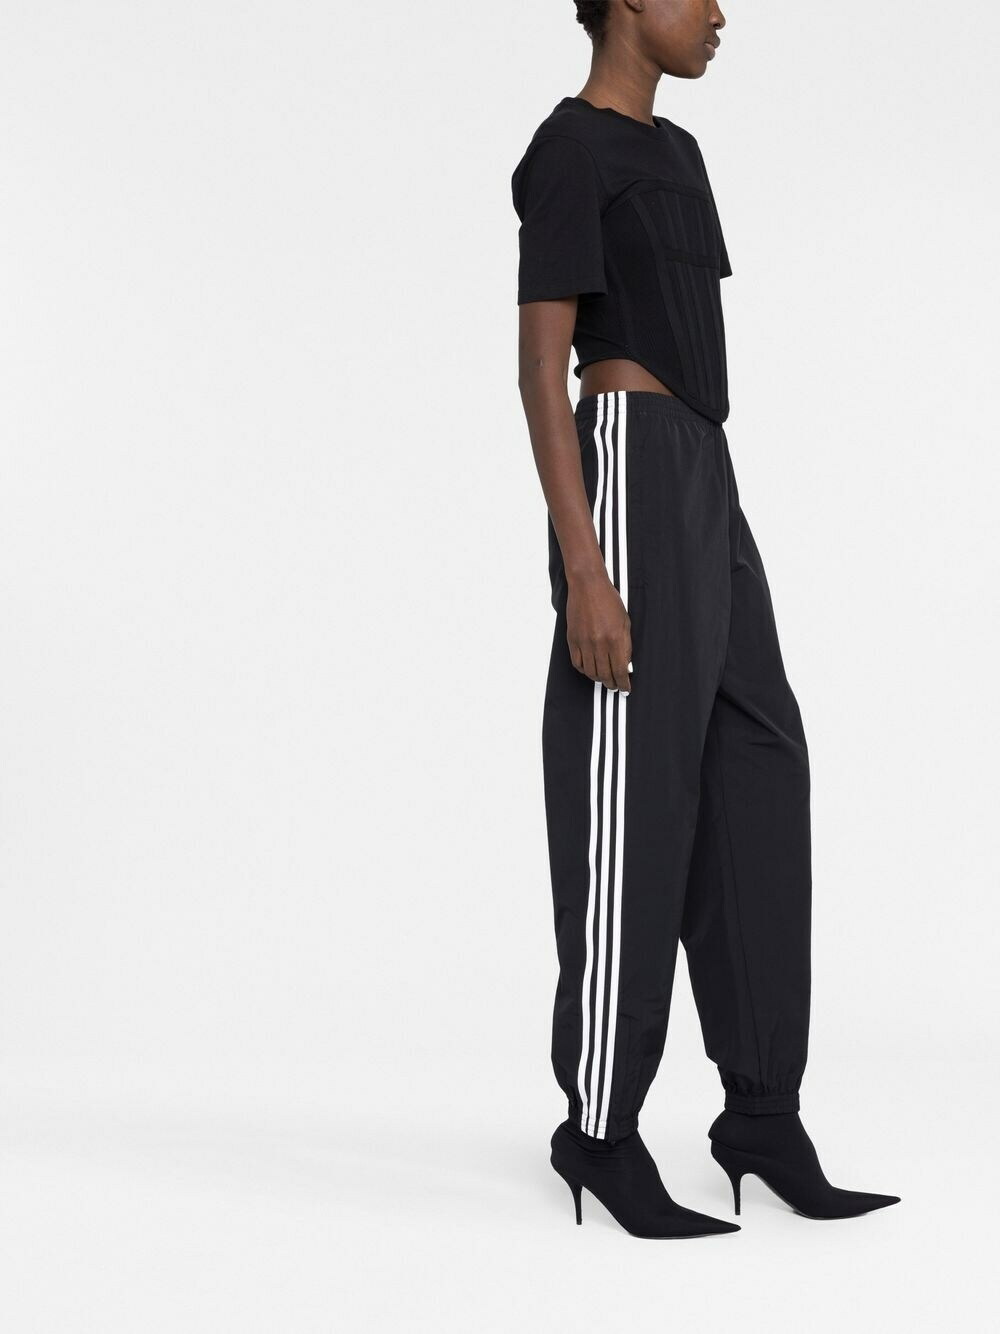 Adidas Unisex Trousers Ess Essential Plain Stanford Track Pants Sports XS  Sale | eBay